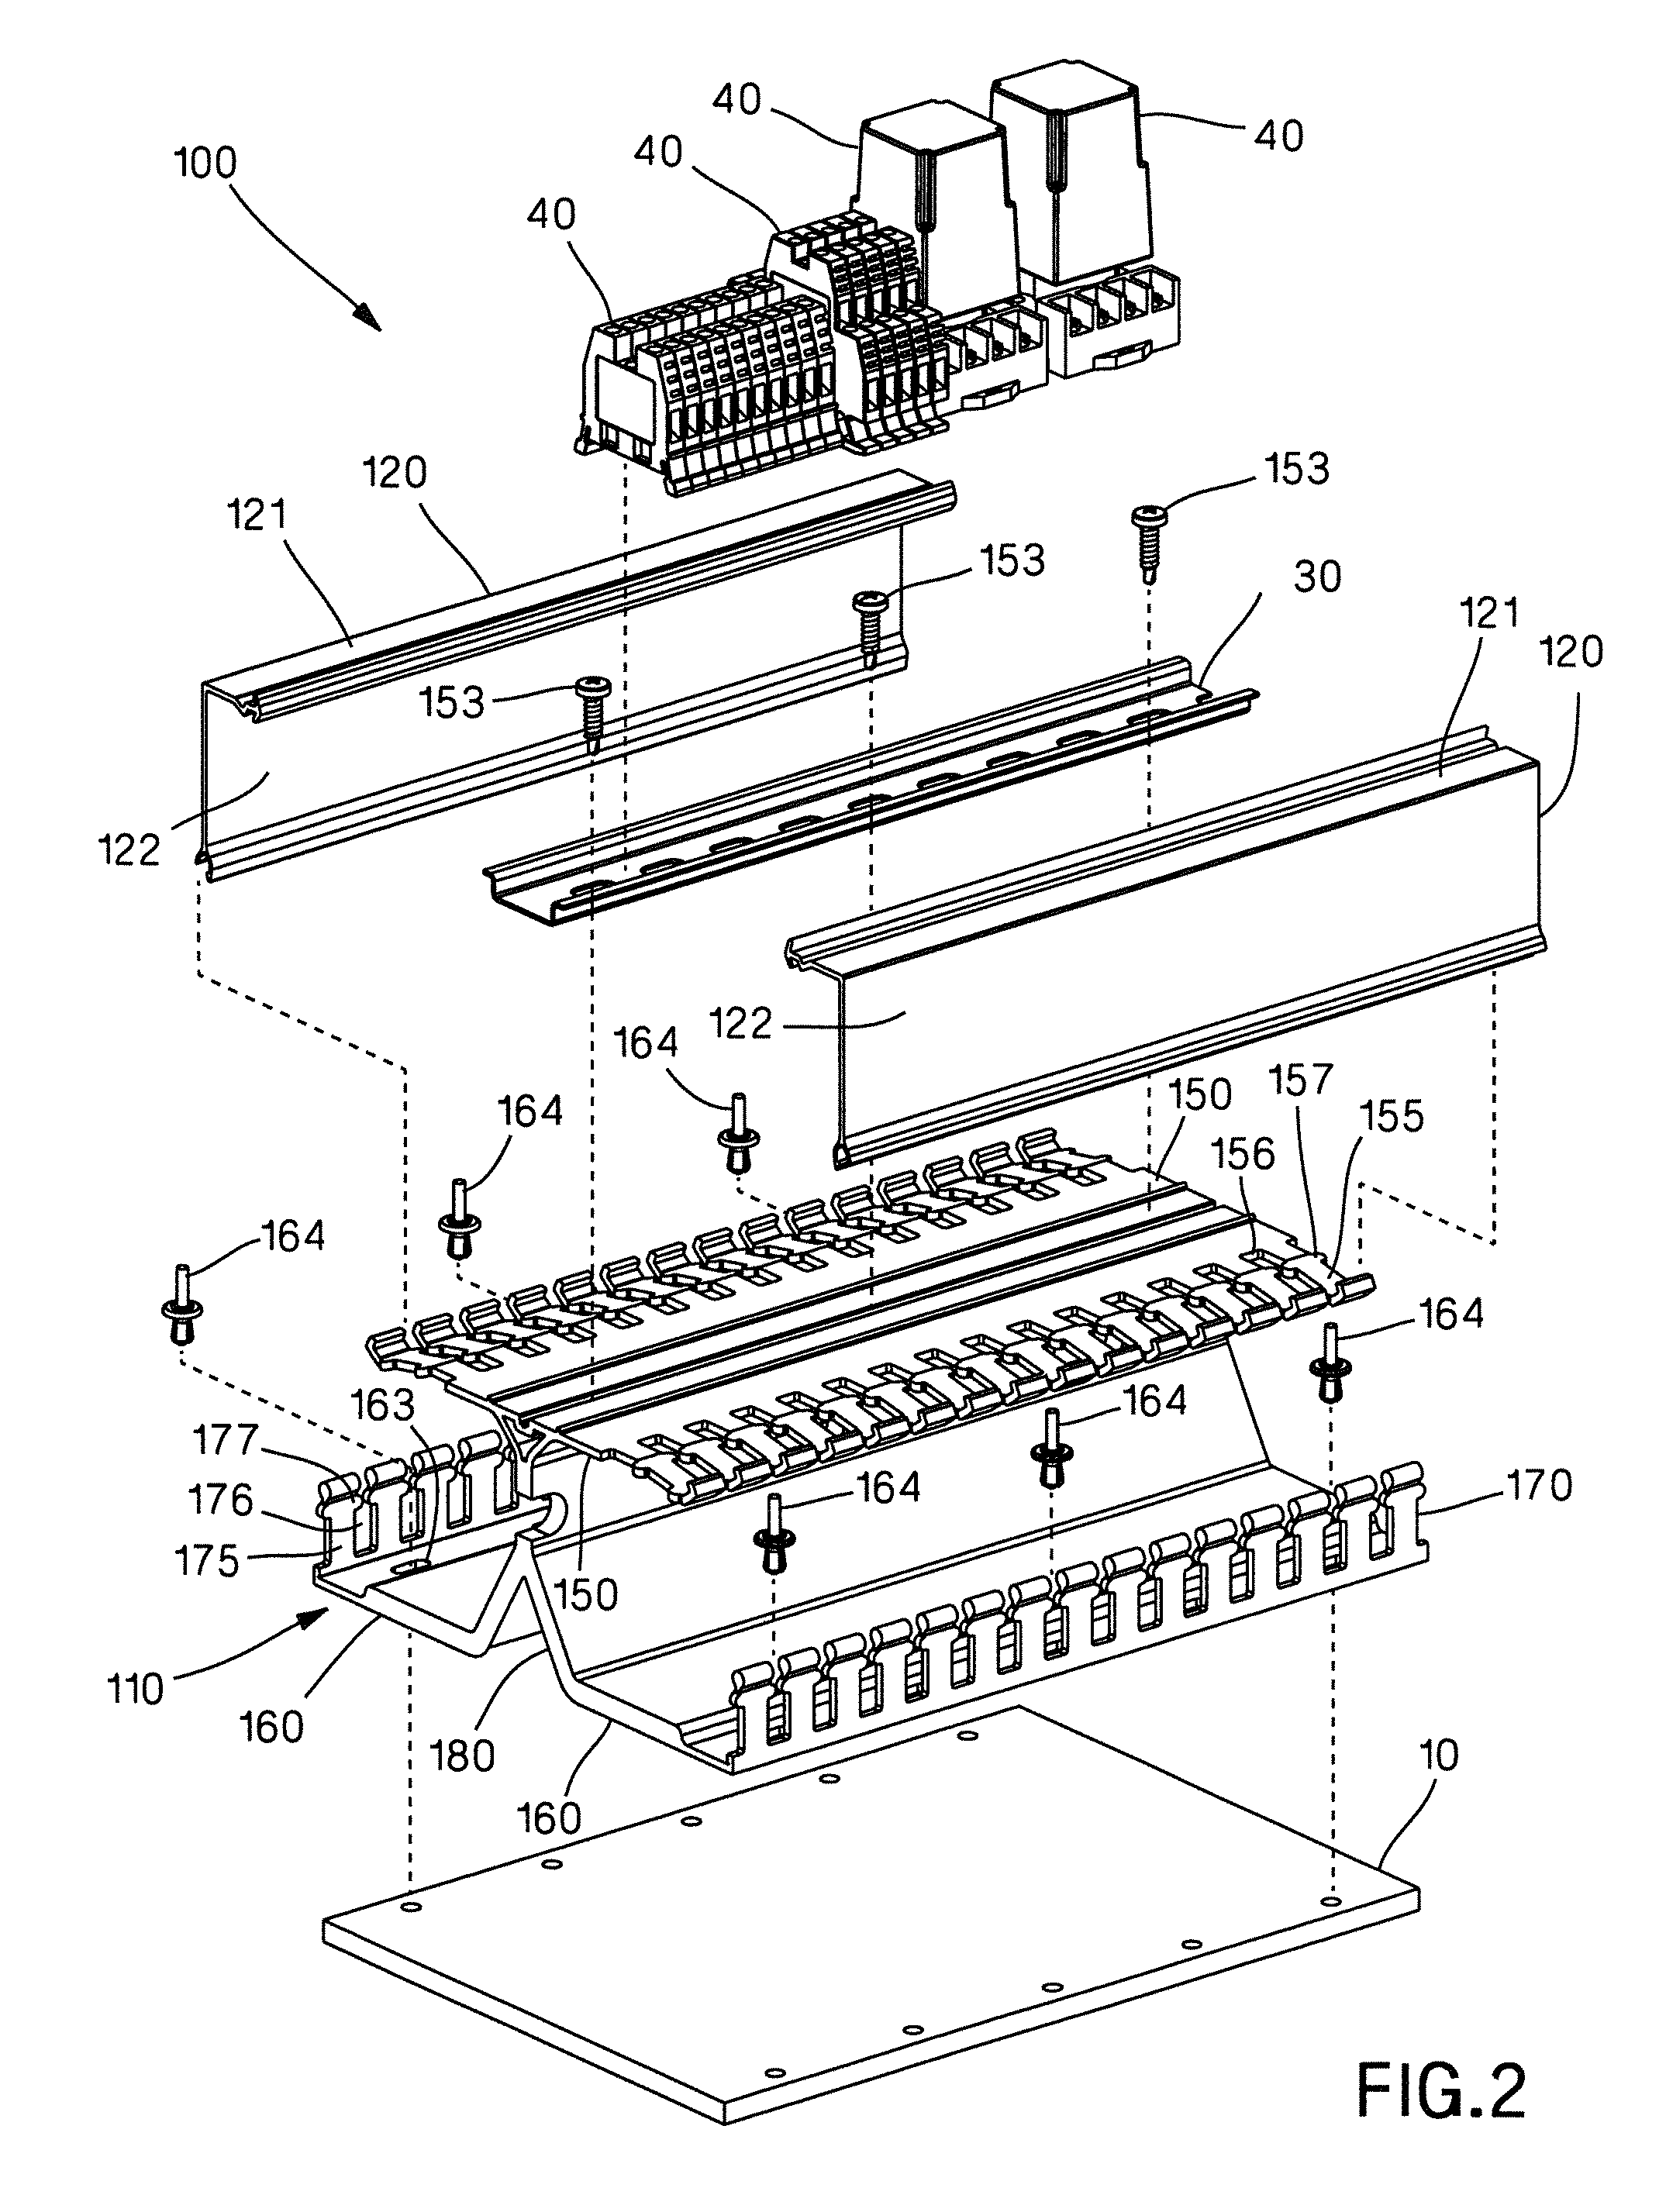 Rail wiring duct